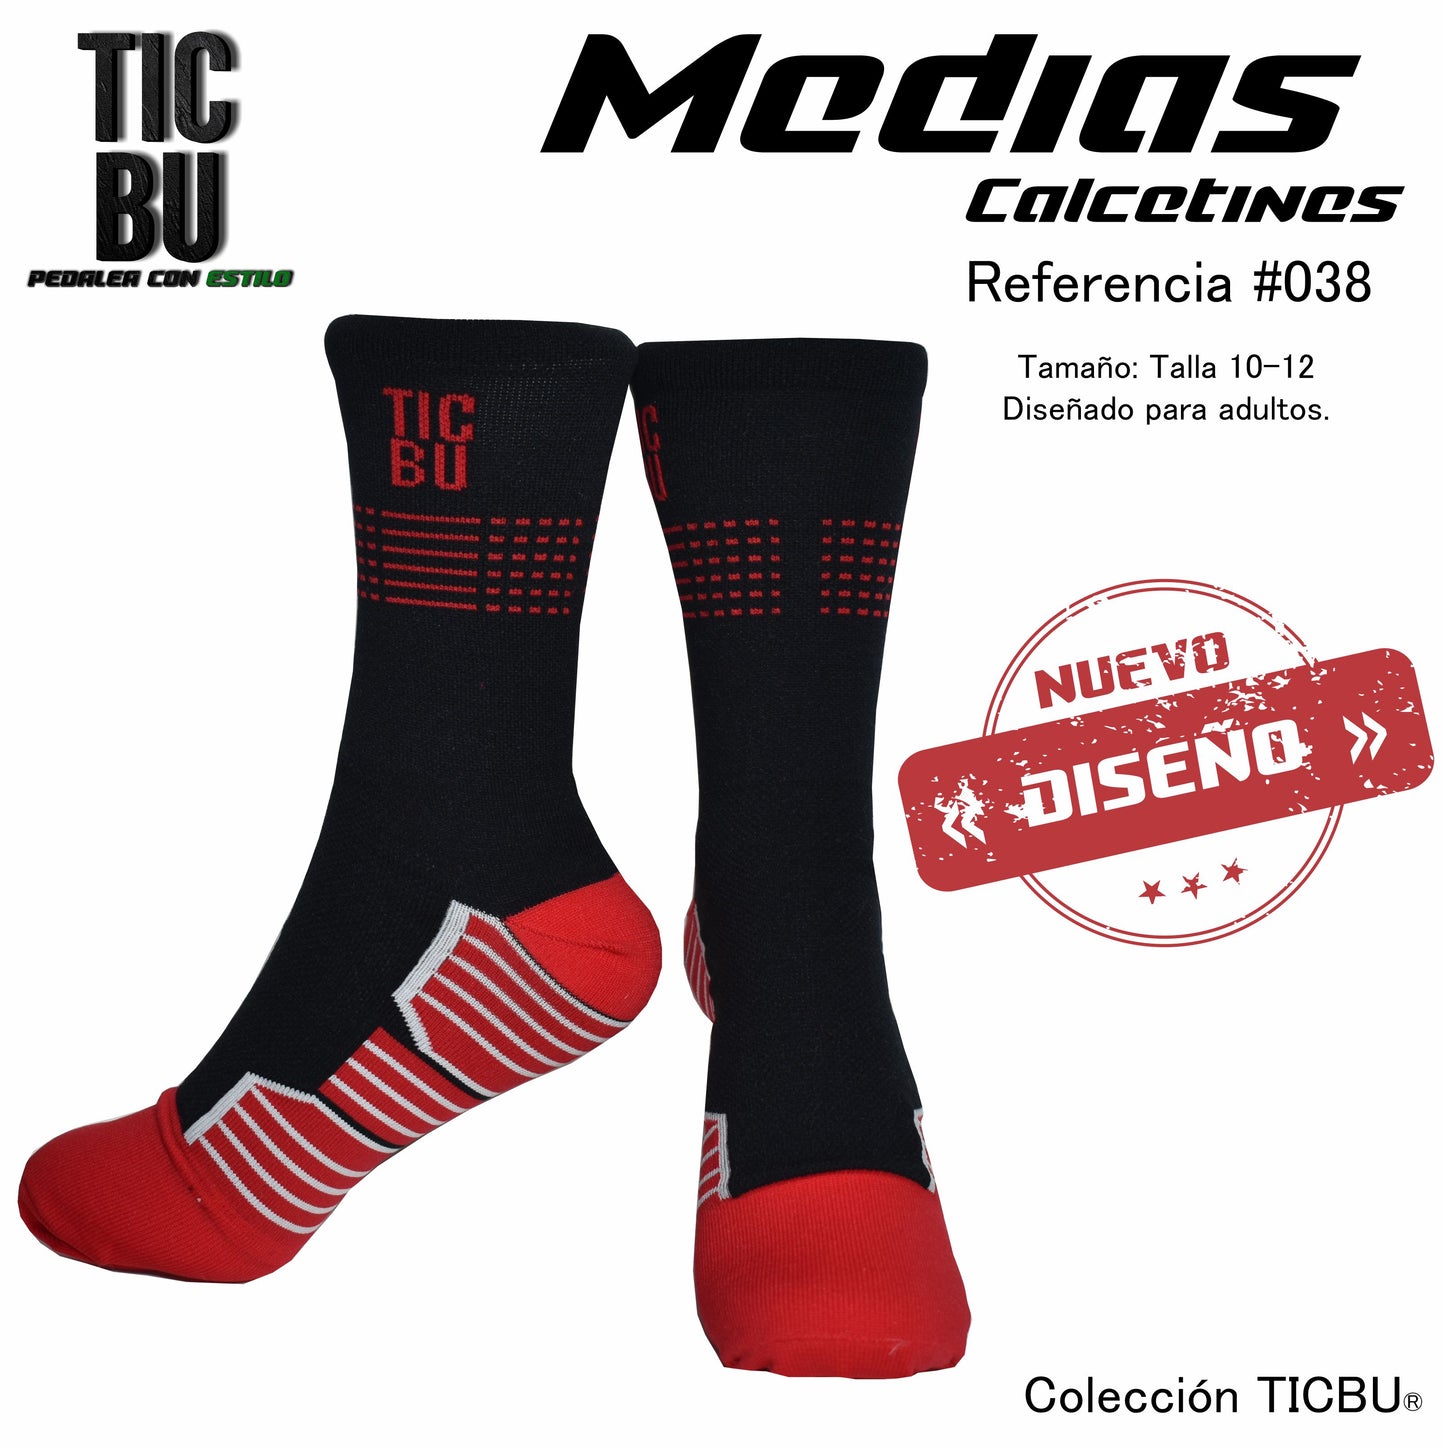 TICBU socks Ref 038